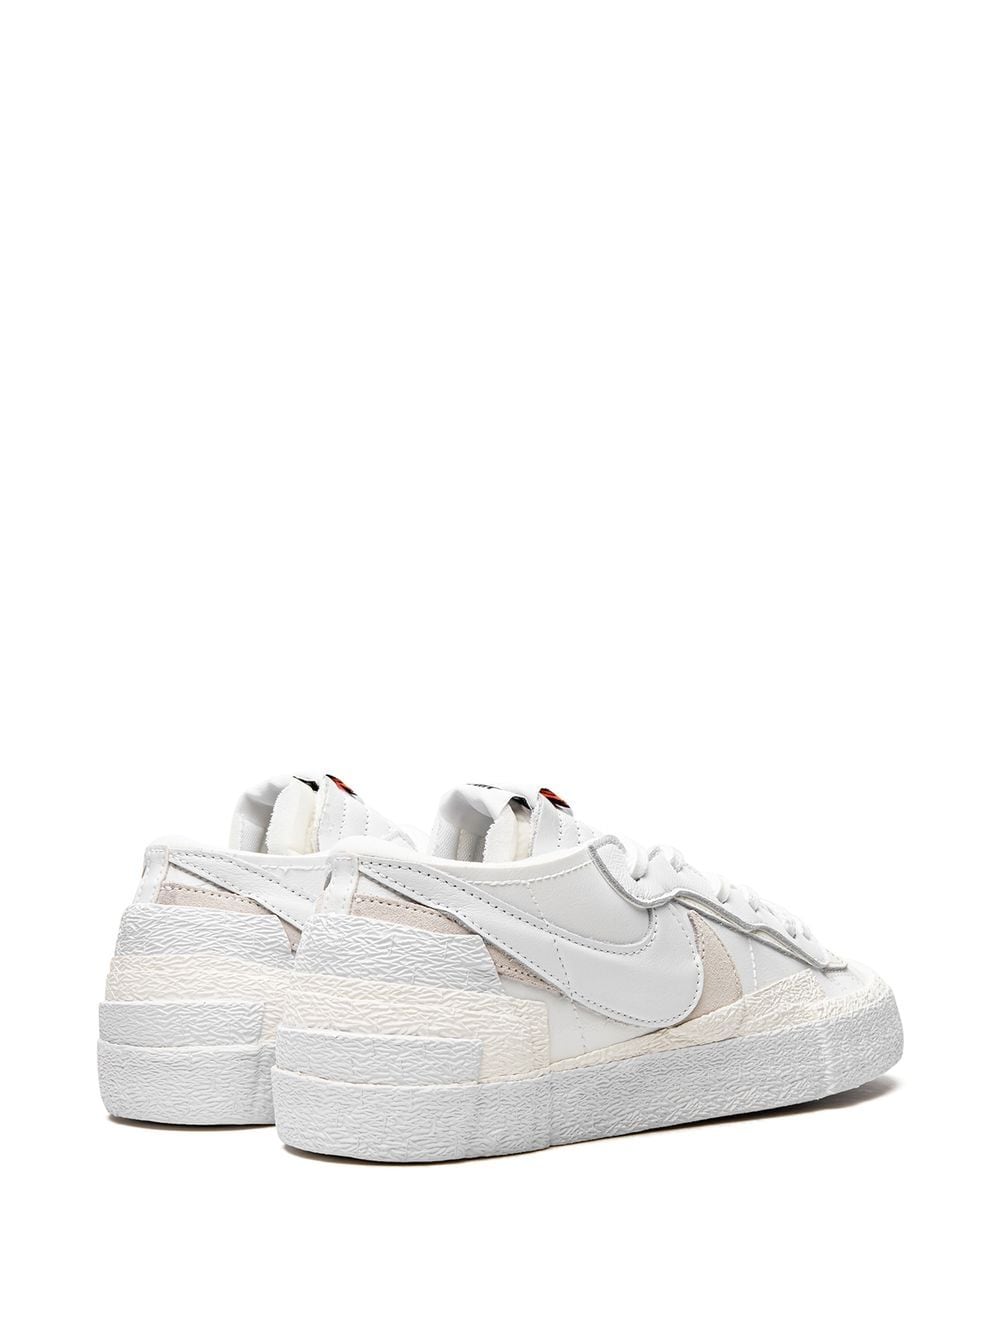 Shop Nike X Sacai Blazer Low "white Patent Leather" Sneakers